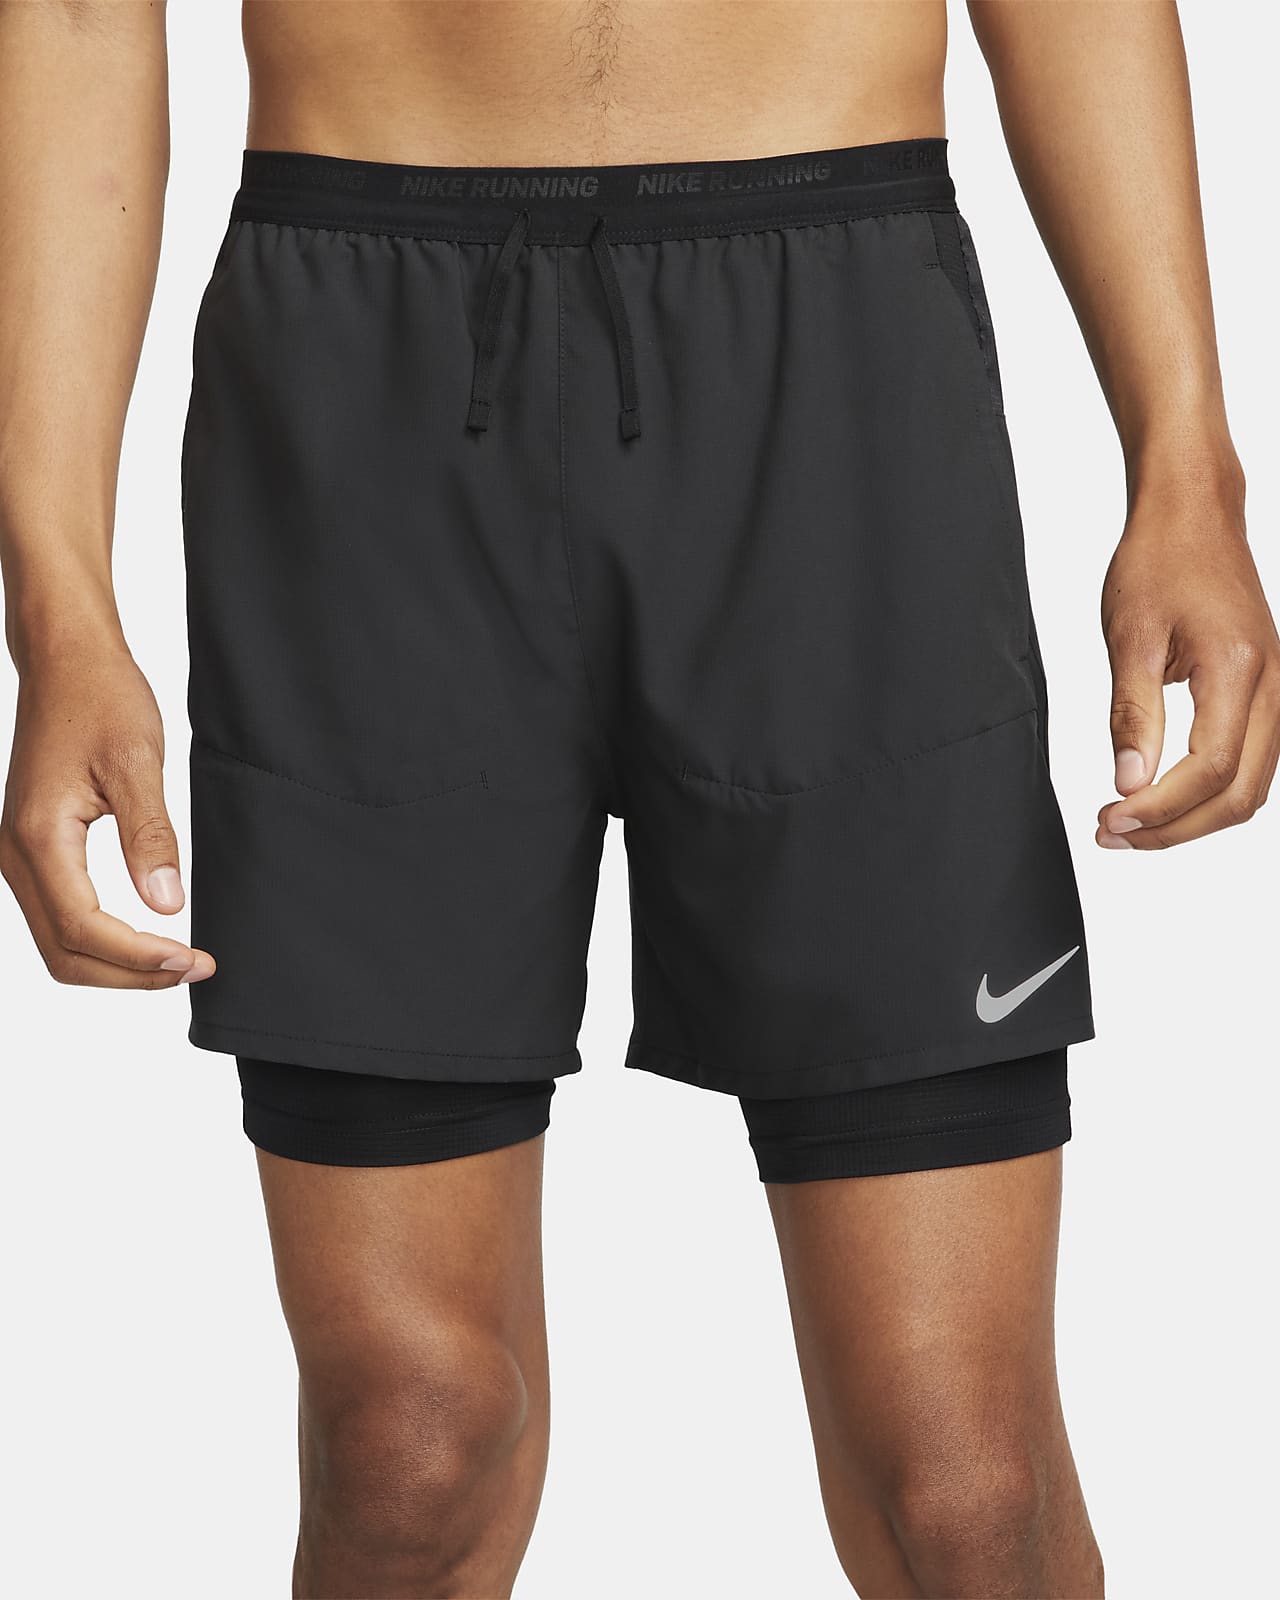 Nike Men's Dri-Fit Power Speed Tight Half Running Shorts-Black/White